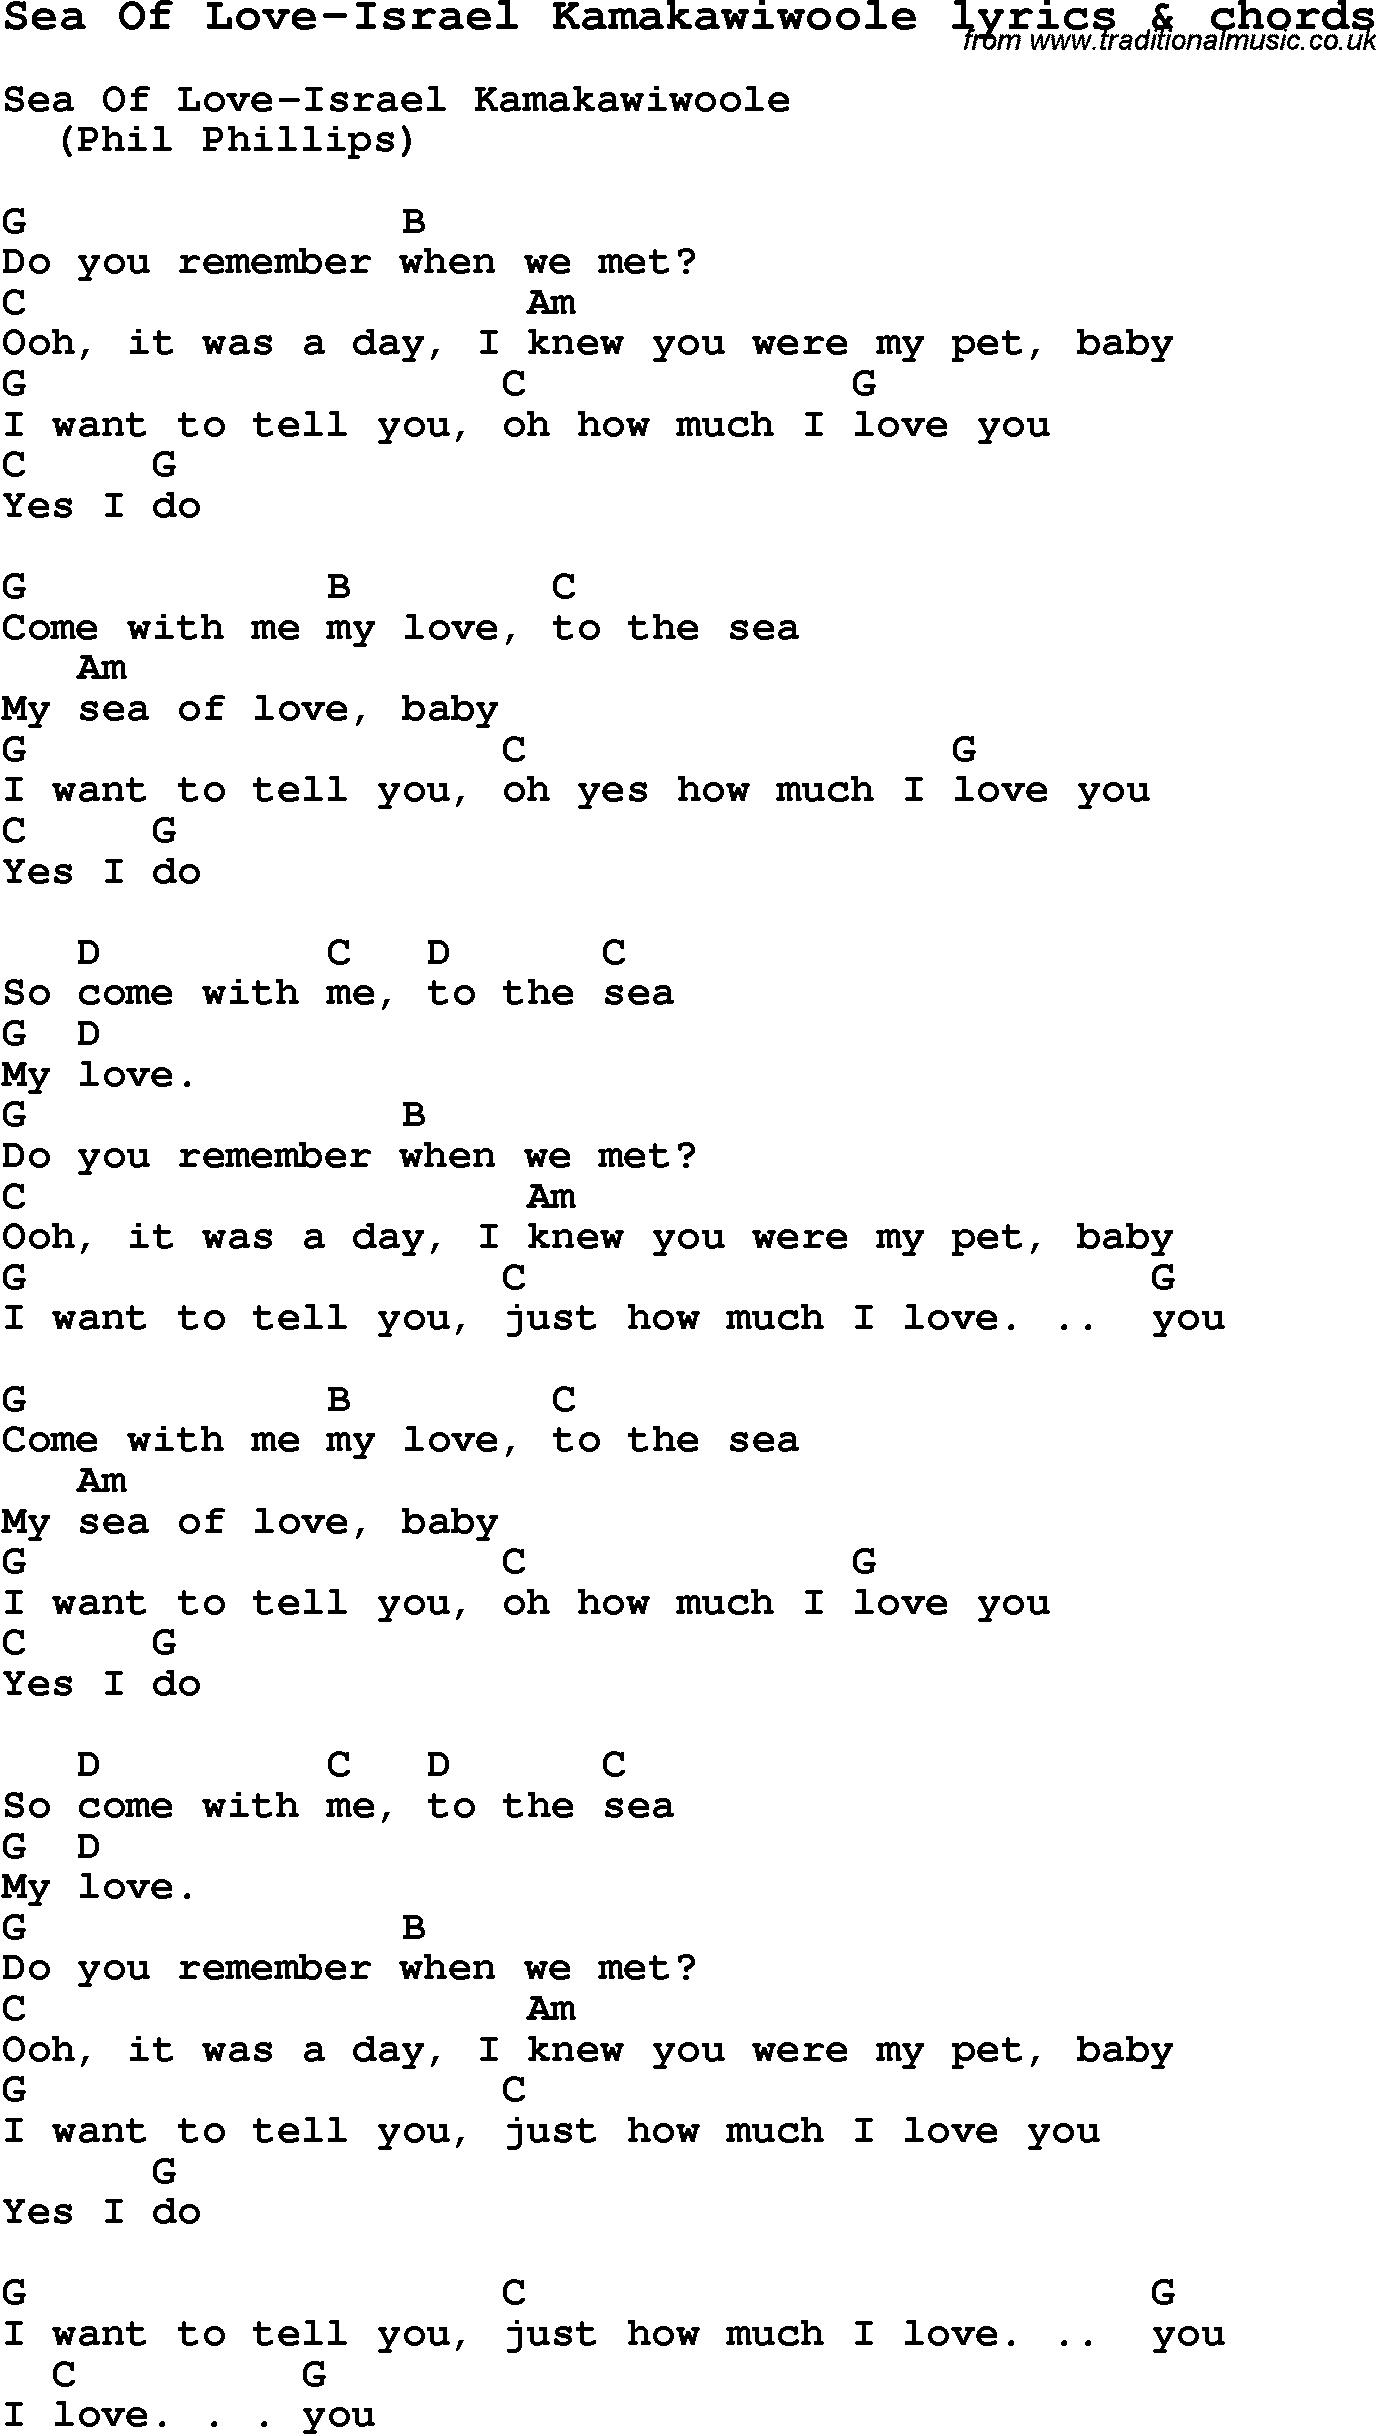 Love Song Lyrics for: Sea Of Love-Israel Kamakawiwoole with chords for Ukulele, Guitar Banjo etc.